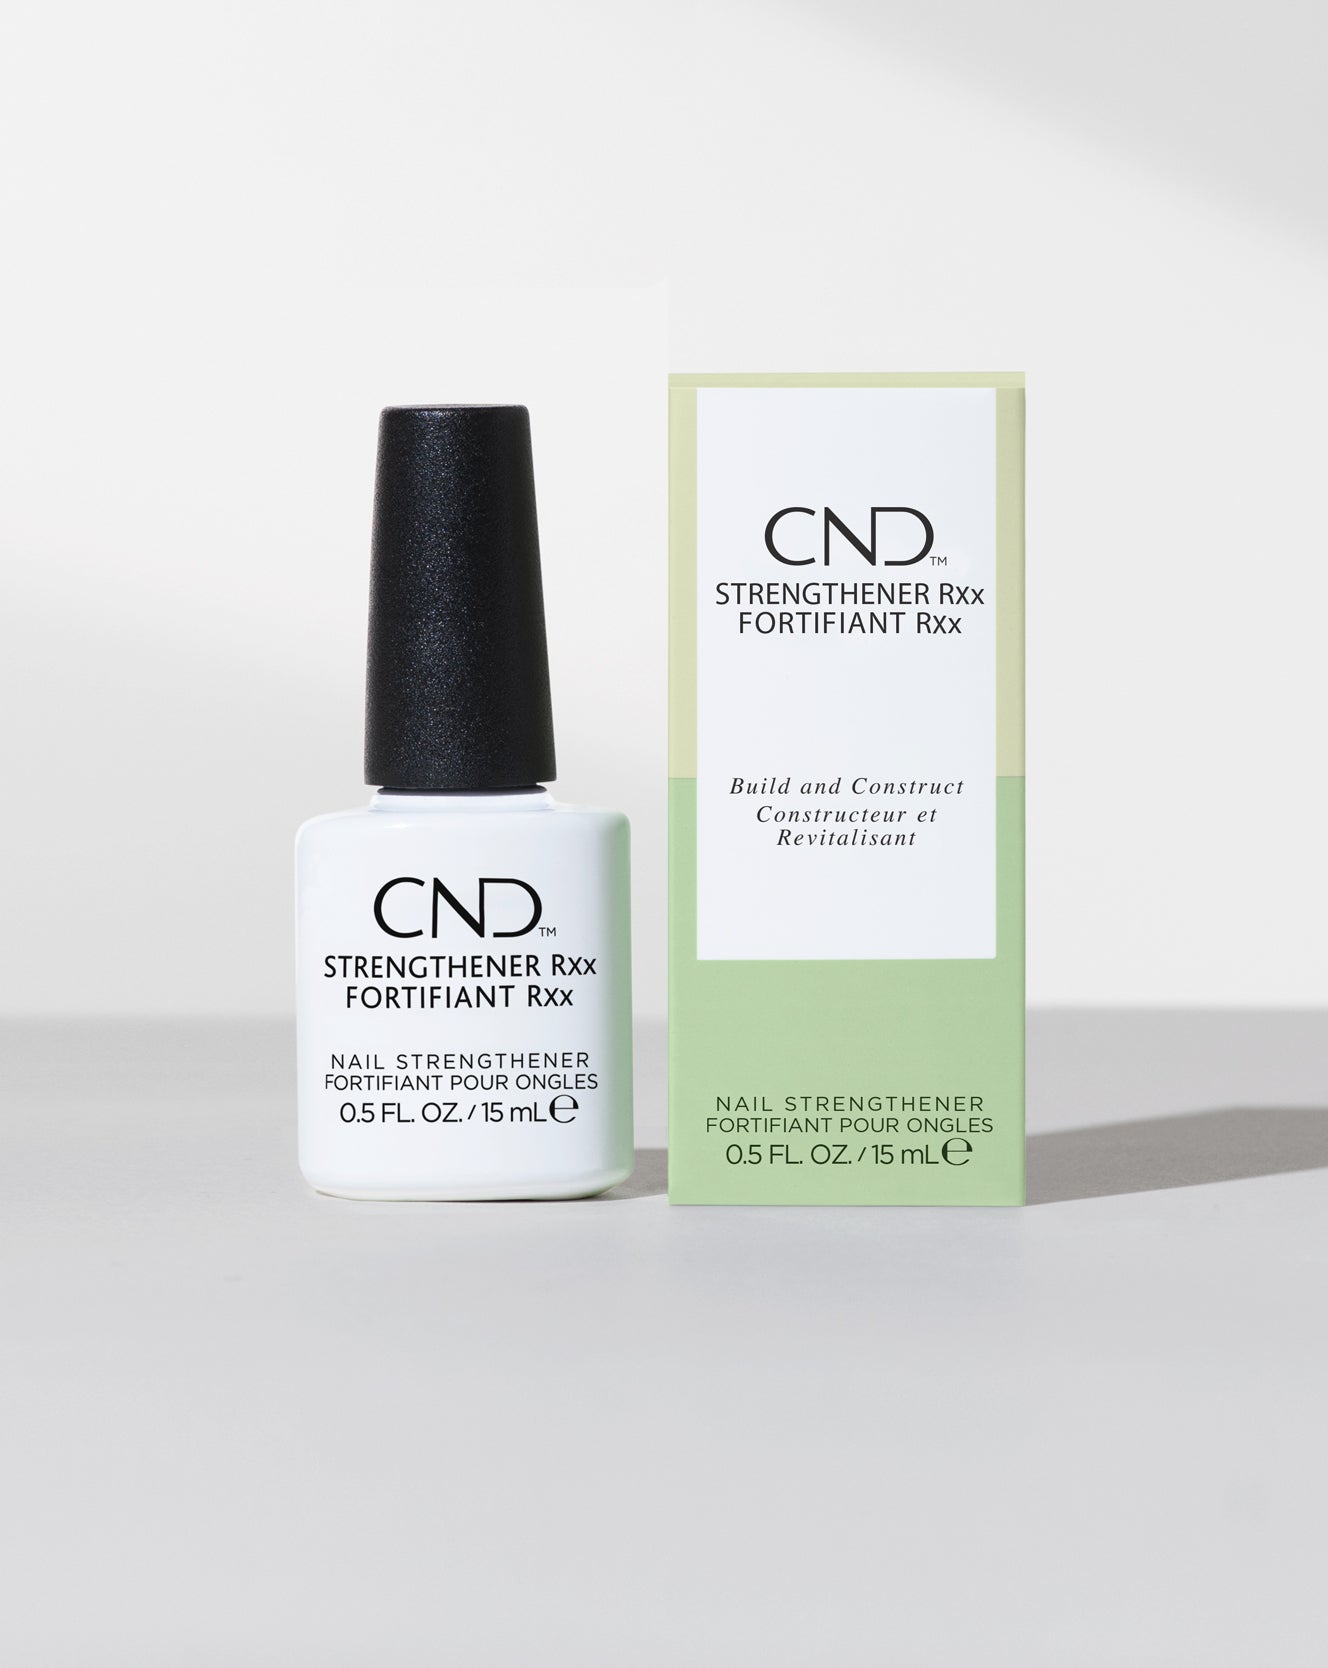 CND Shellac Gel Nail Polish, Long-lasting NailPaint Color with  Curve-hugging Brush, White Polish, 0.25 fl oz